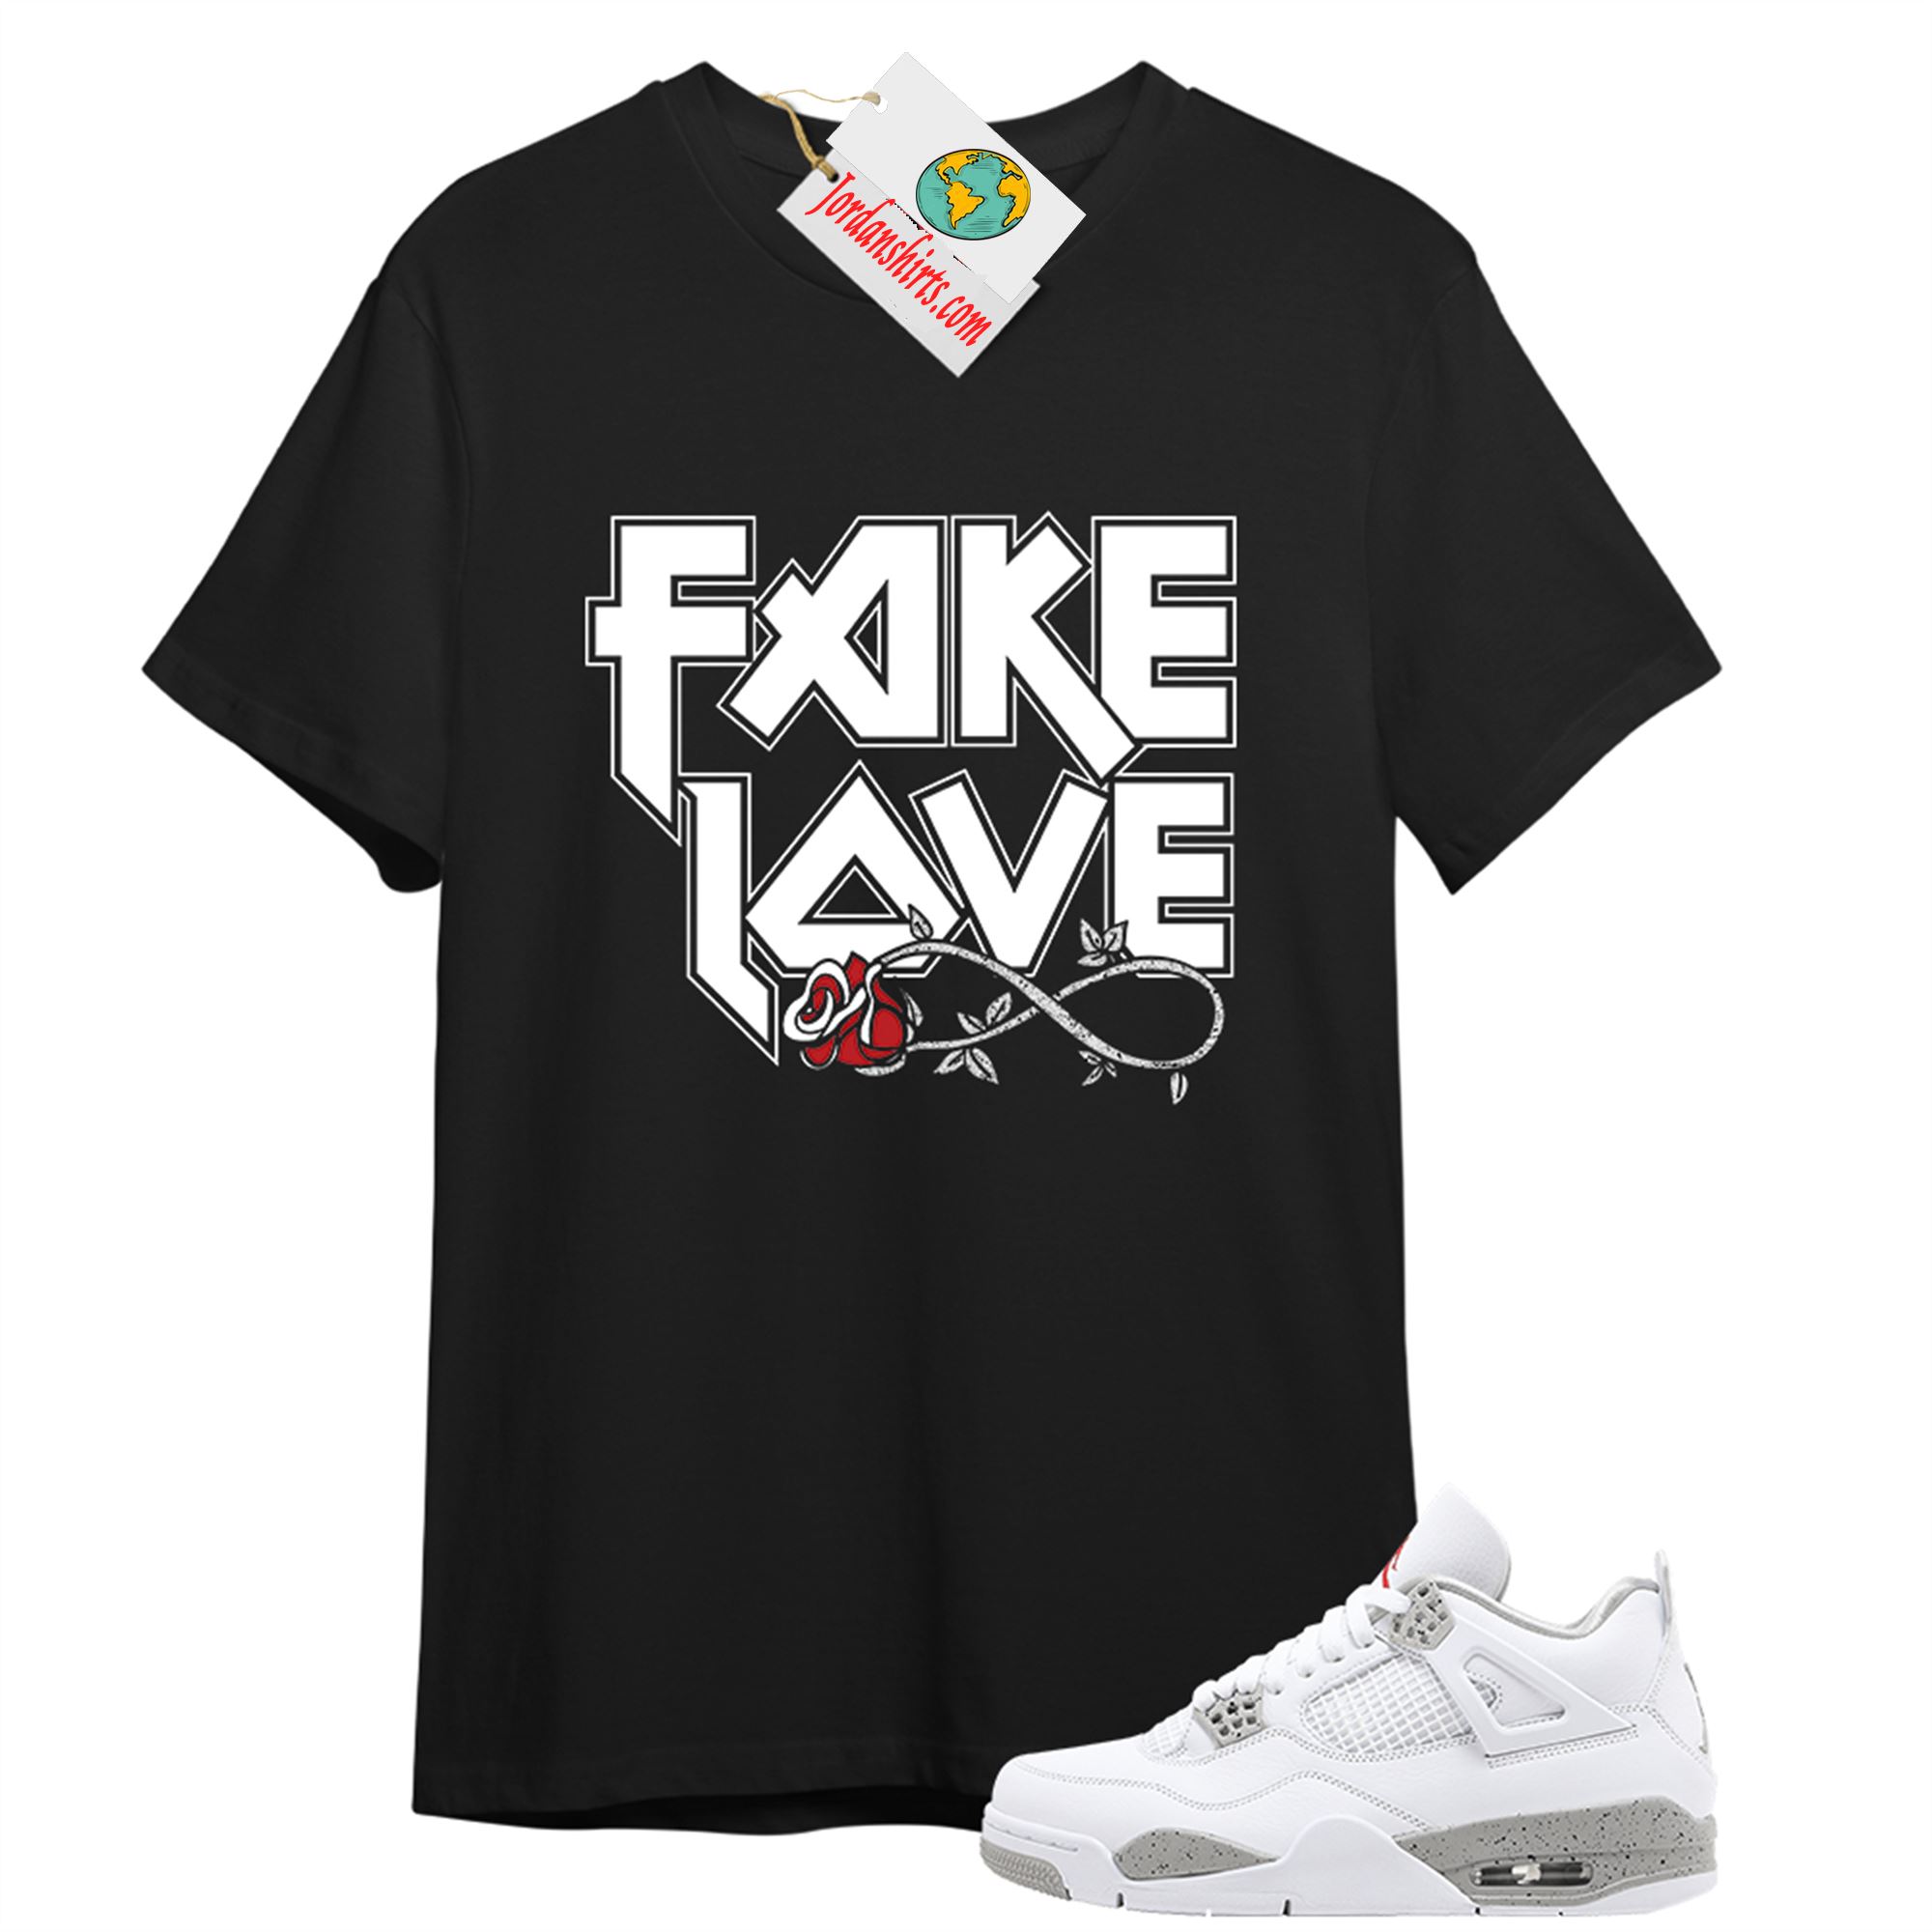 Jordan 4 Shirt, Fake Love Infinity Rose Black T-shirt Air Jordan 4 White Oreo 4s Full Size Up To 5xl